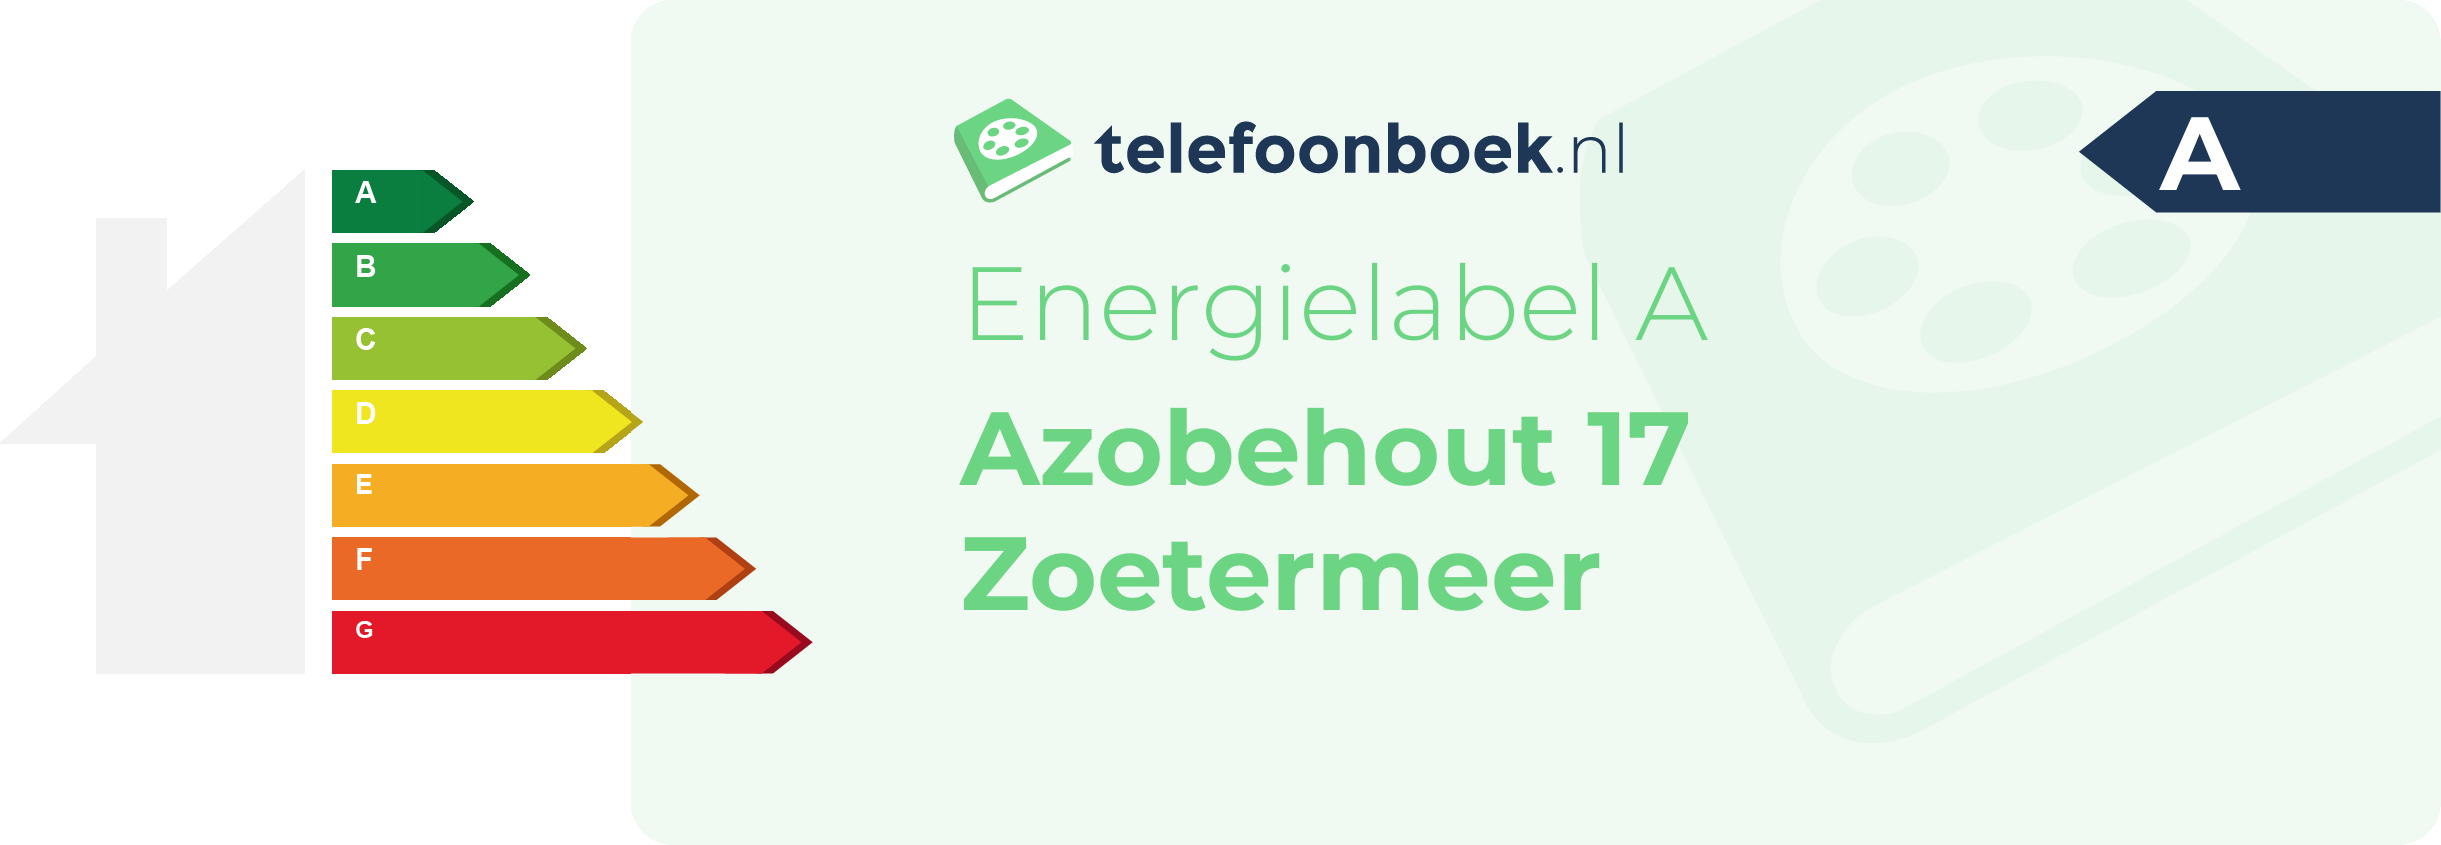 Energielabel Azobehout 17 Zoetermeer